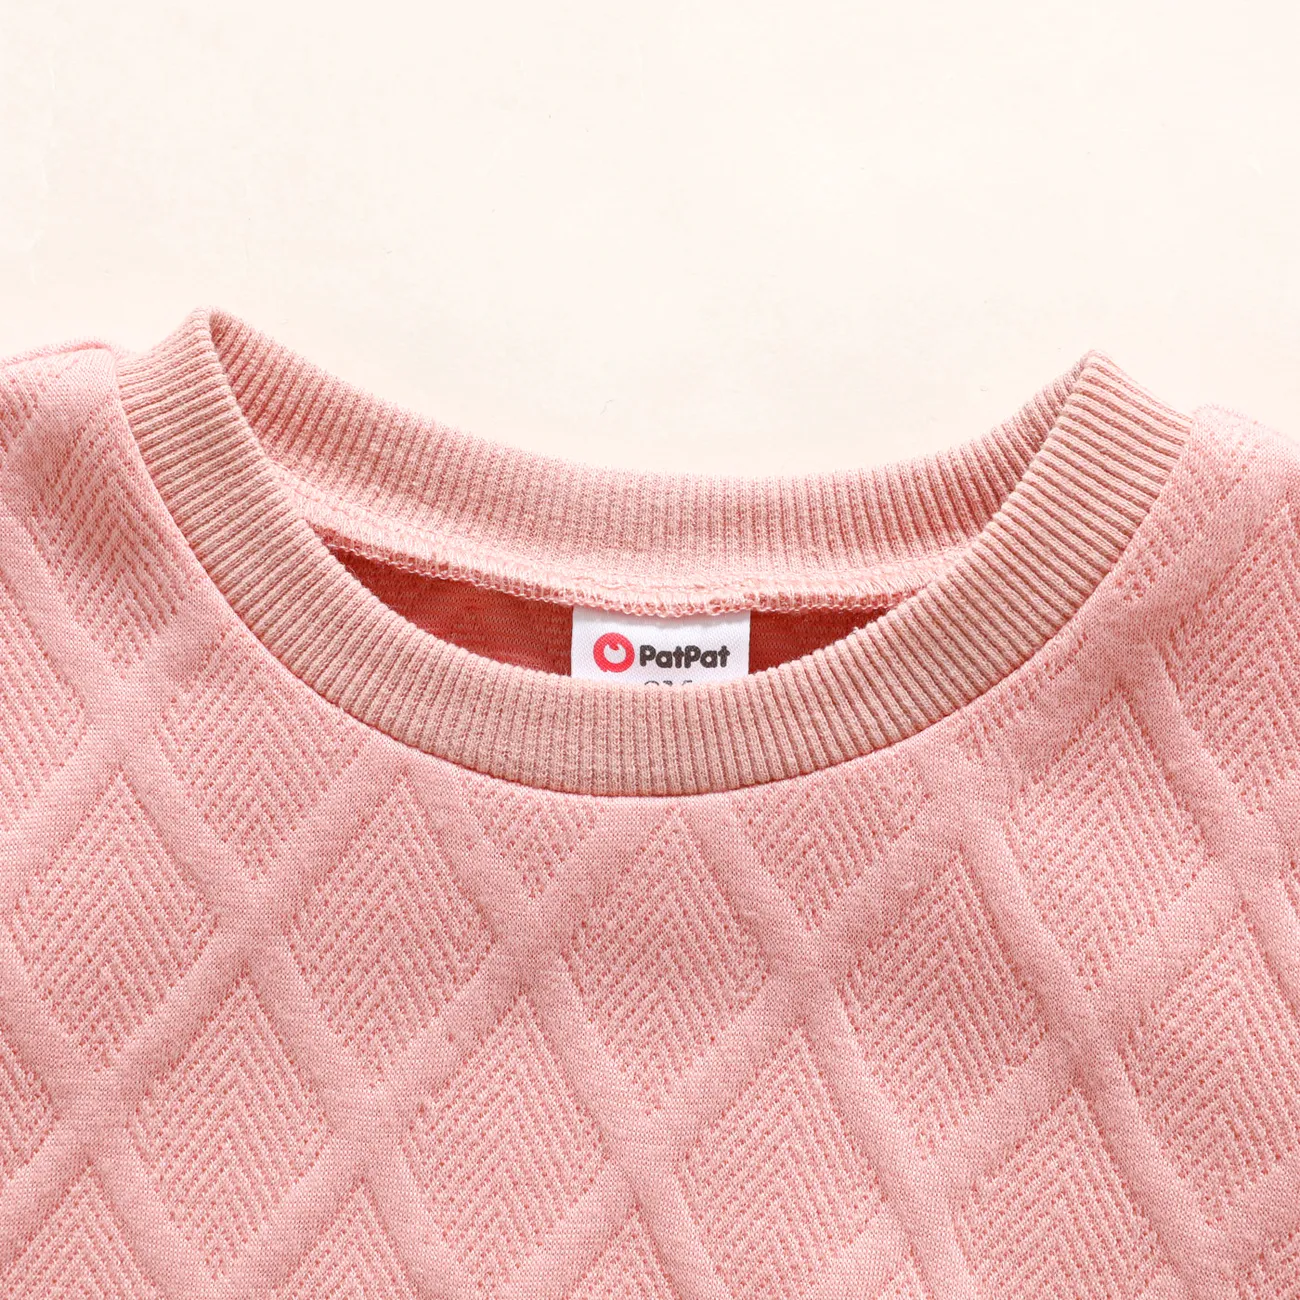 Toddler Girl/Boy Solid Color Textured Pullover Sweatshirt Pink big image 1